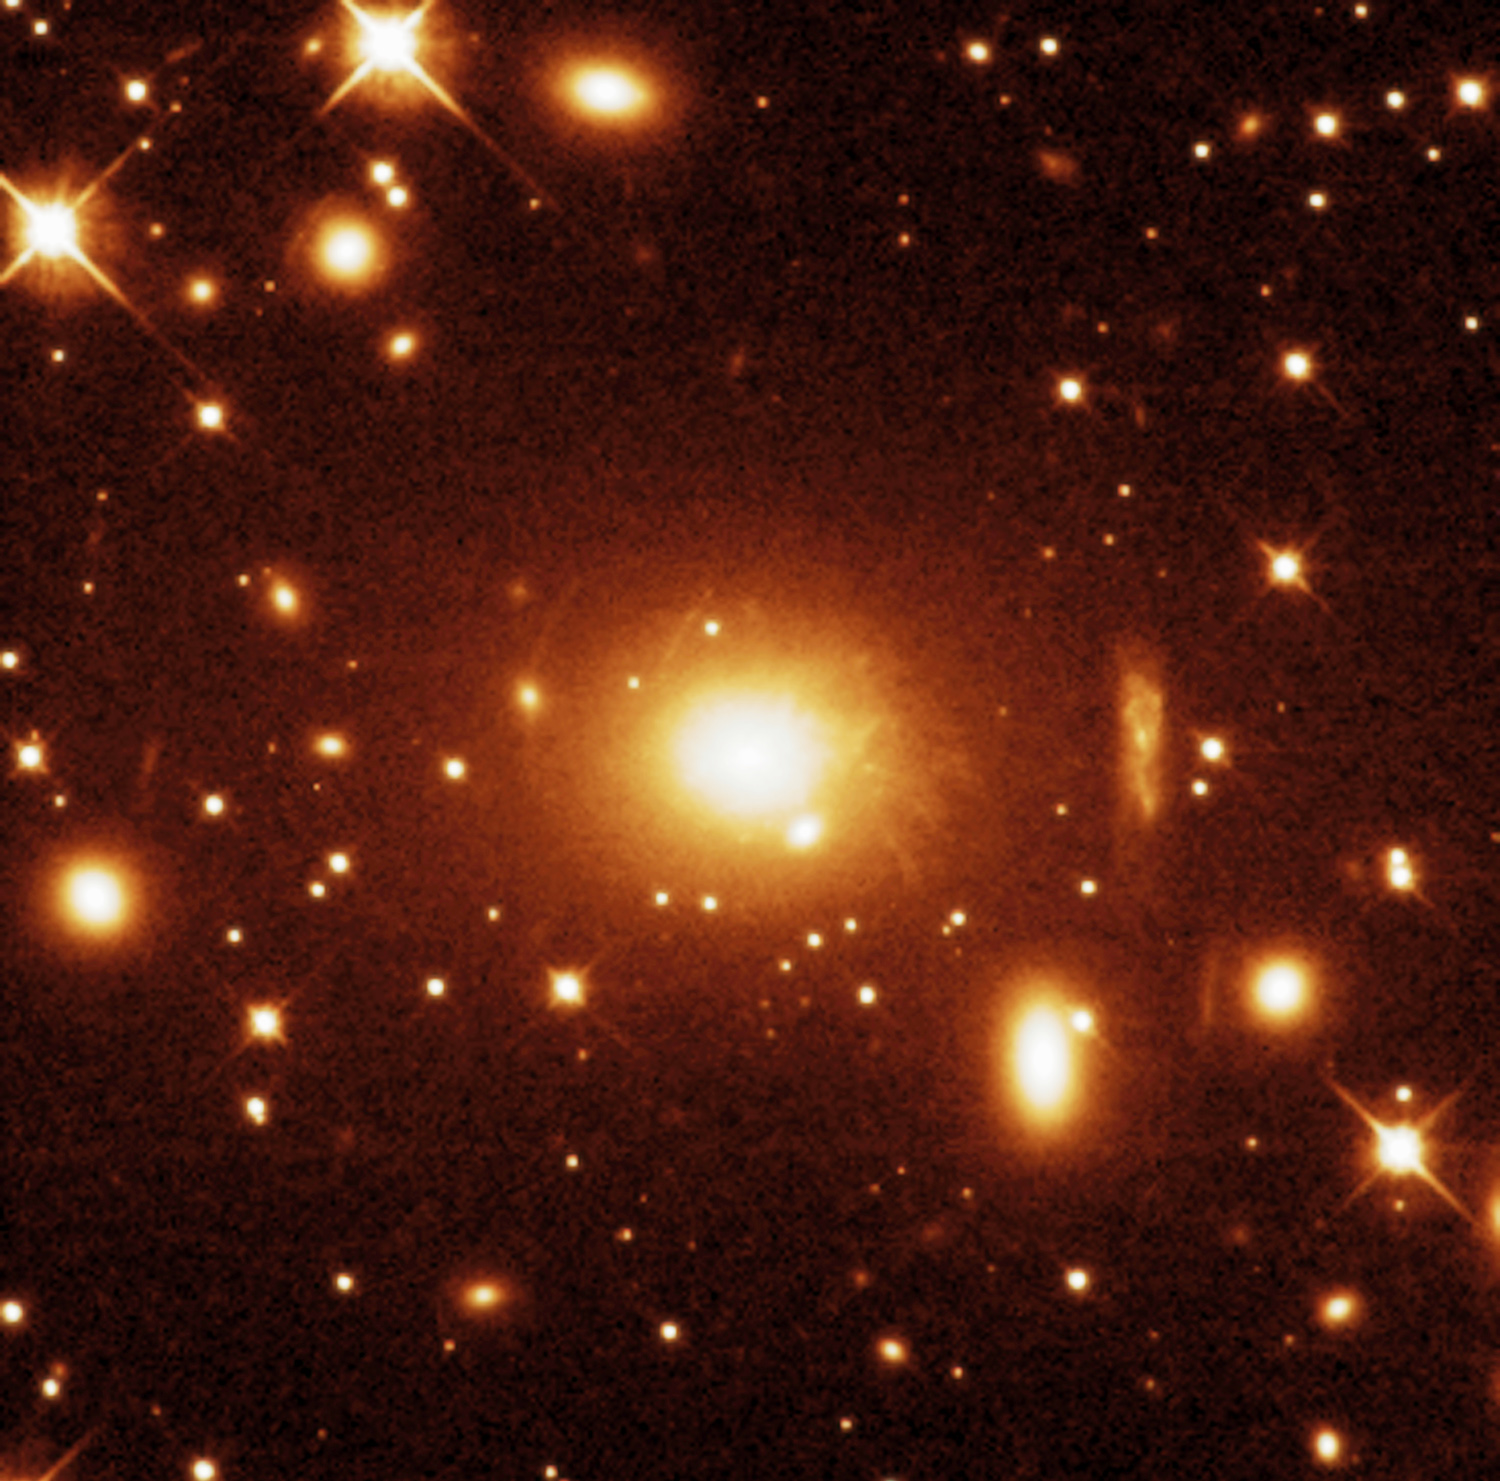 Hubble image of PKS 0745-191